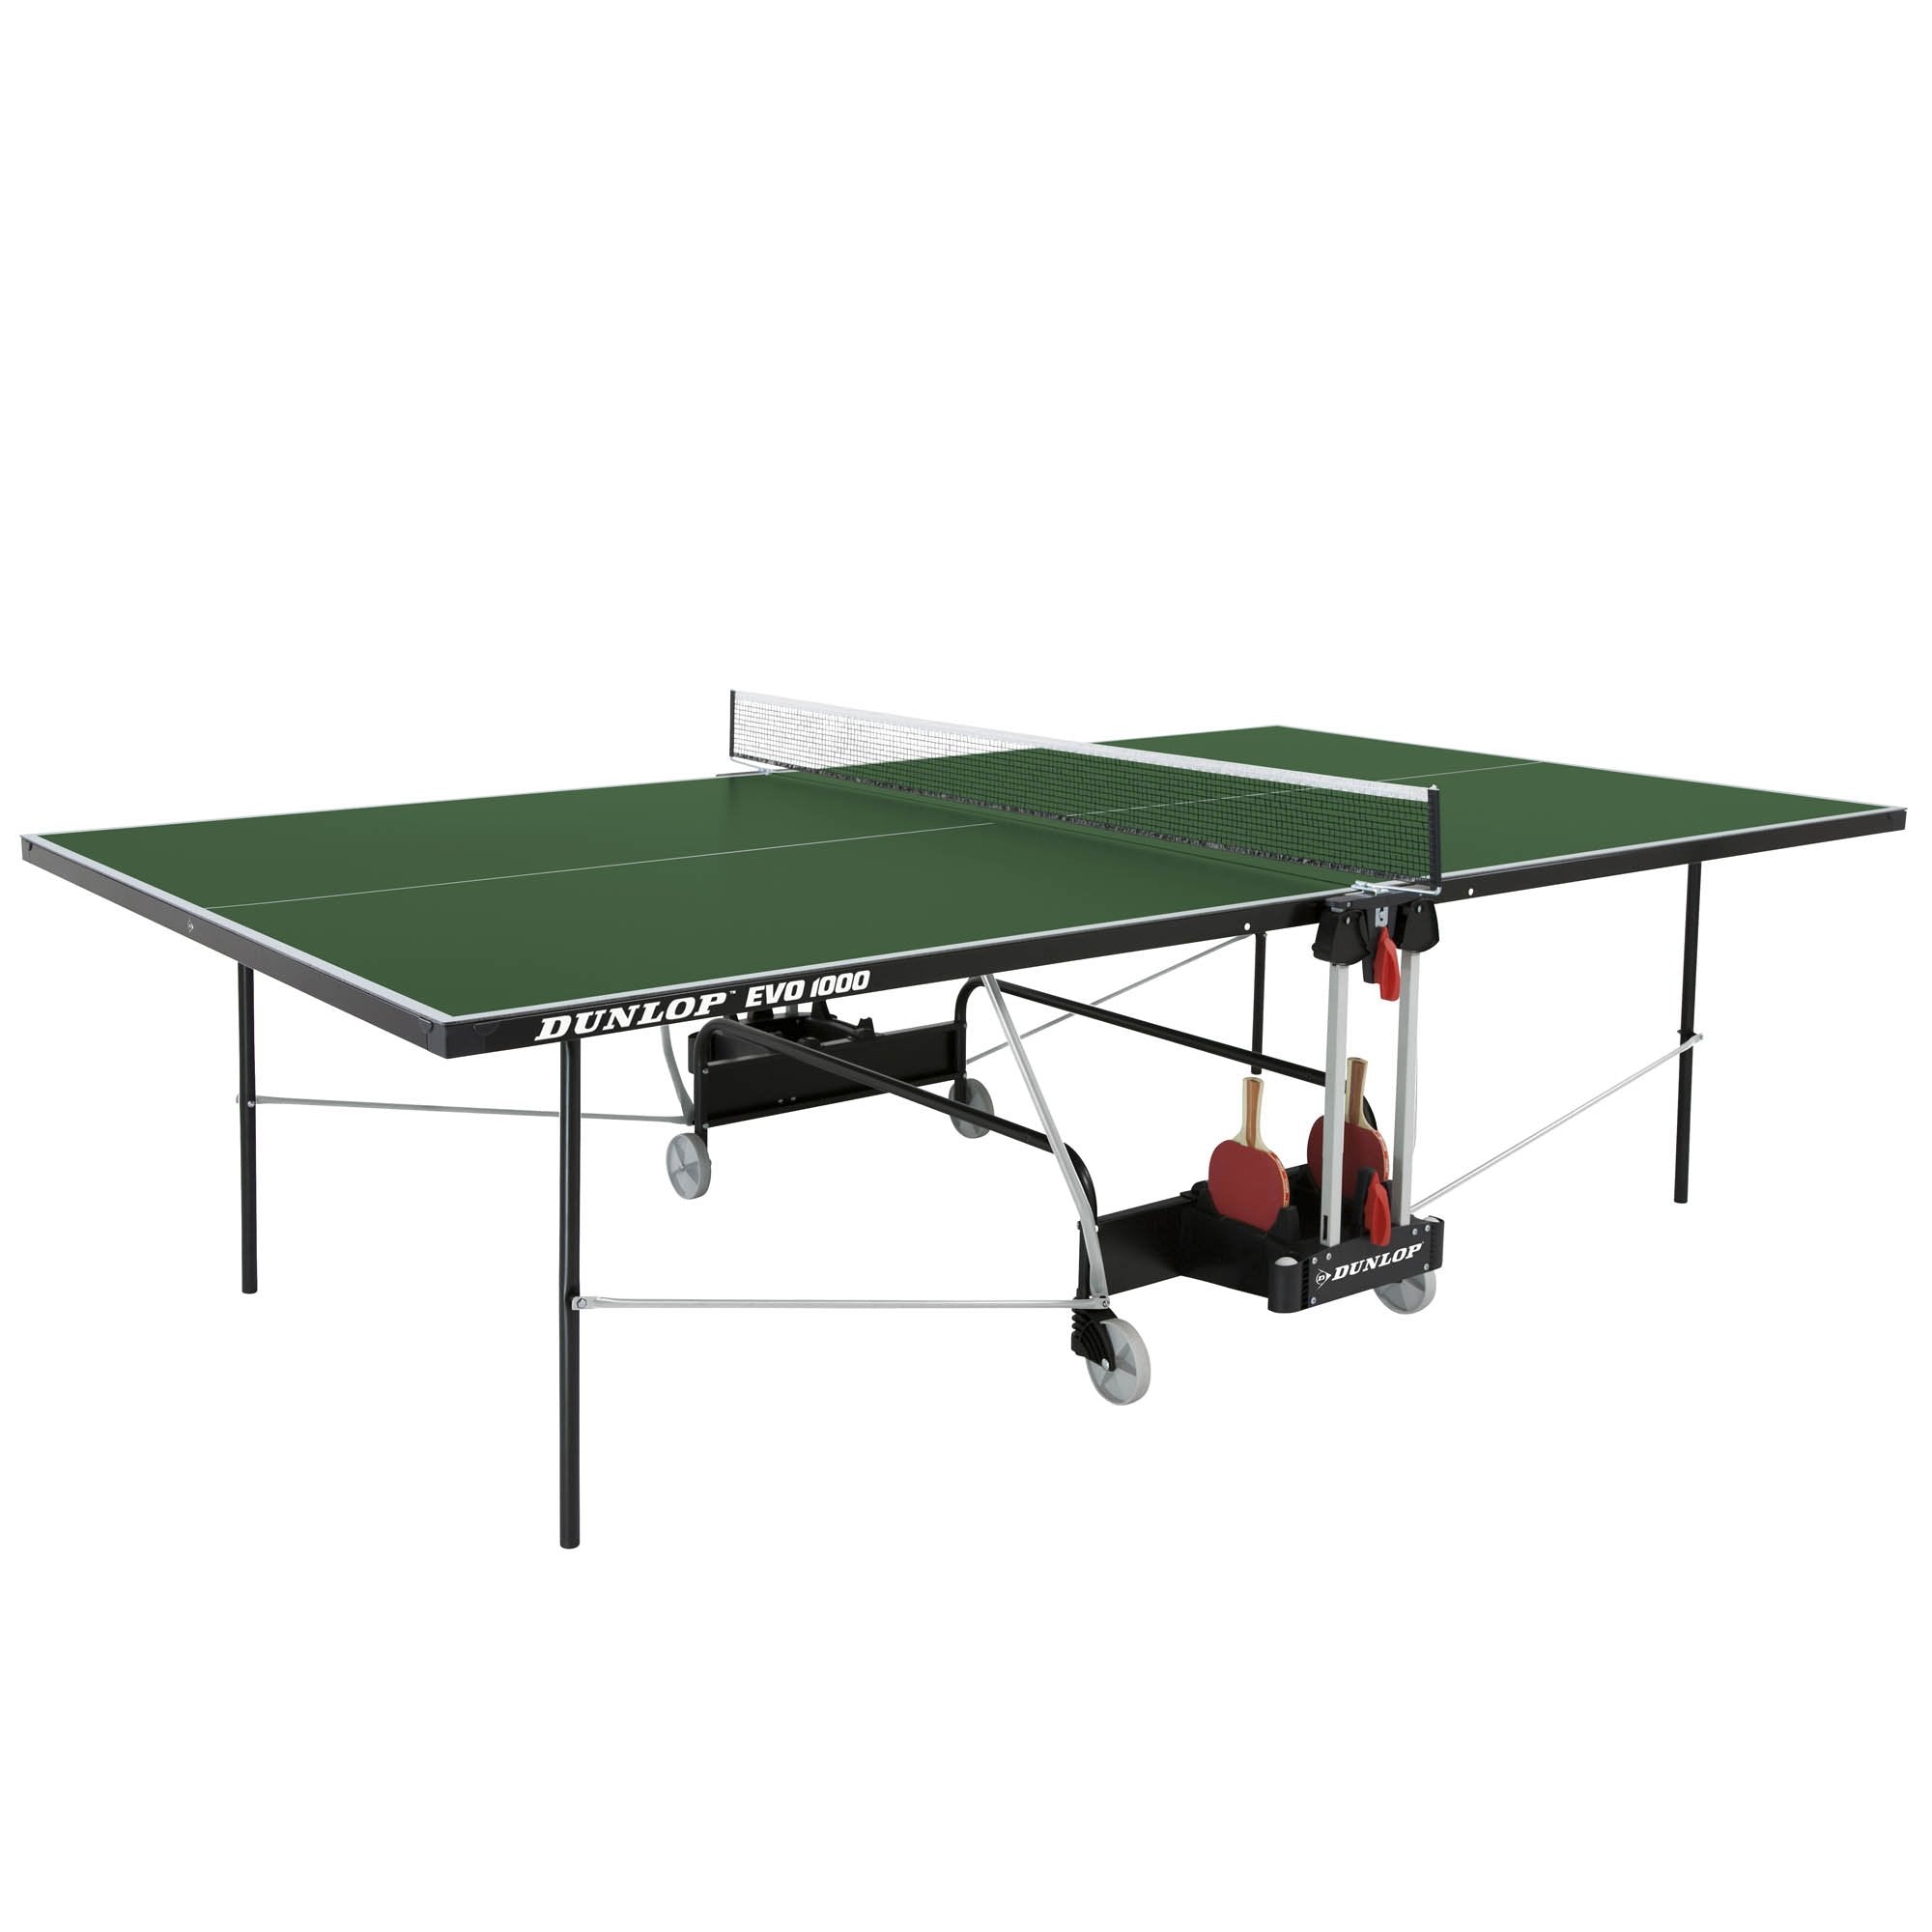 Dunlop Evo 1000 Outdoor Table Tennis Table